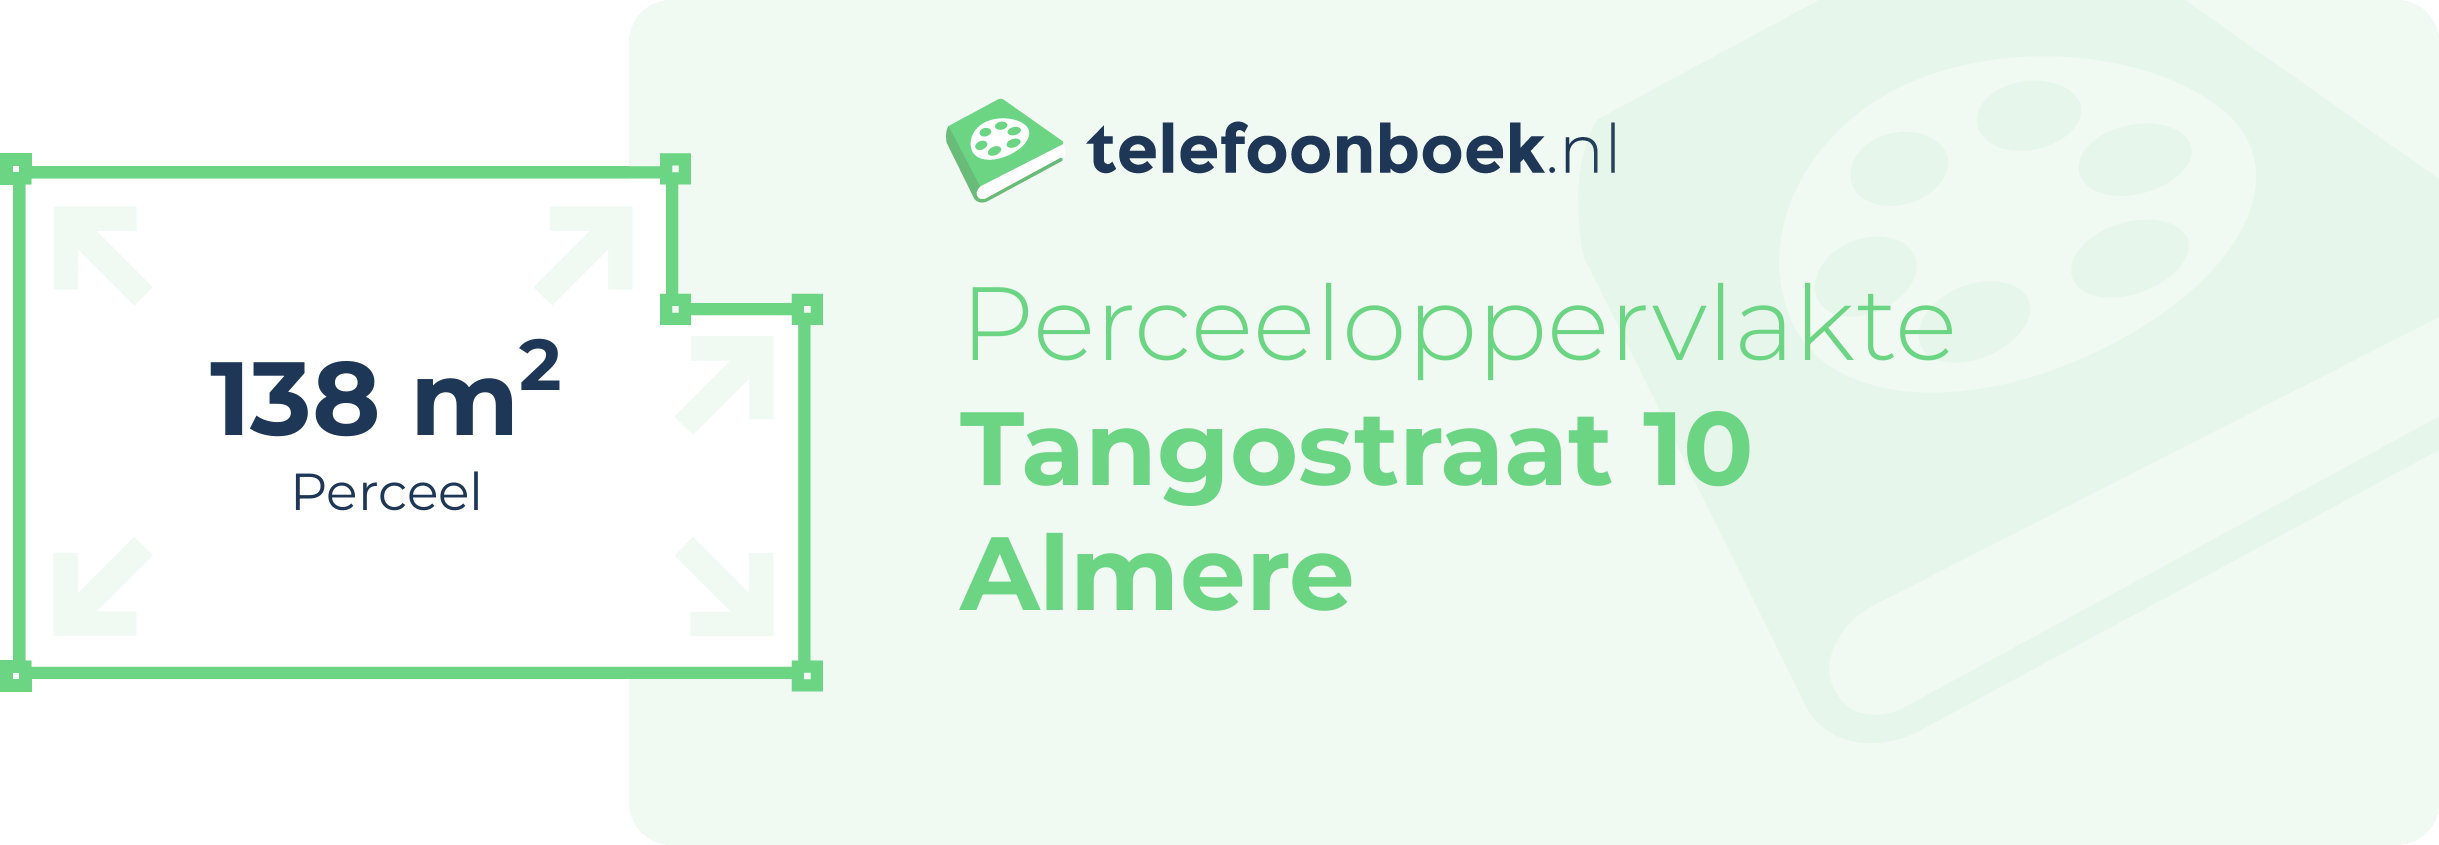 Perceeloppervlakte Tangostraat 10 Almere